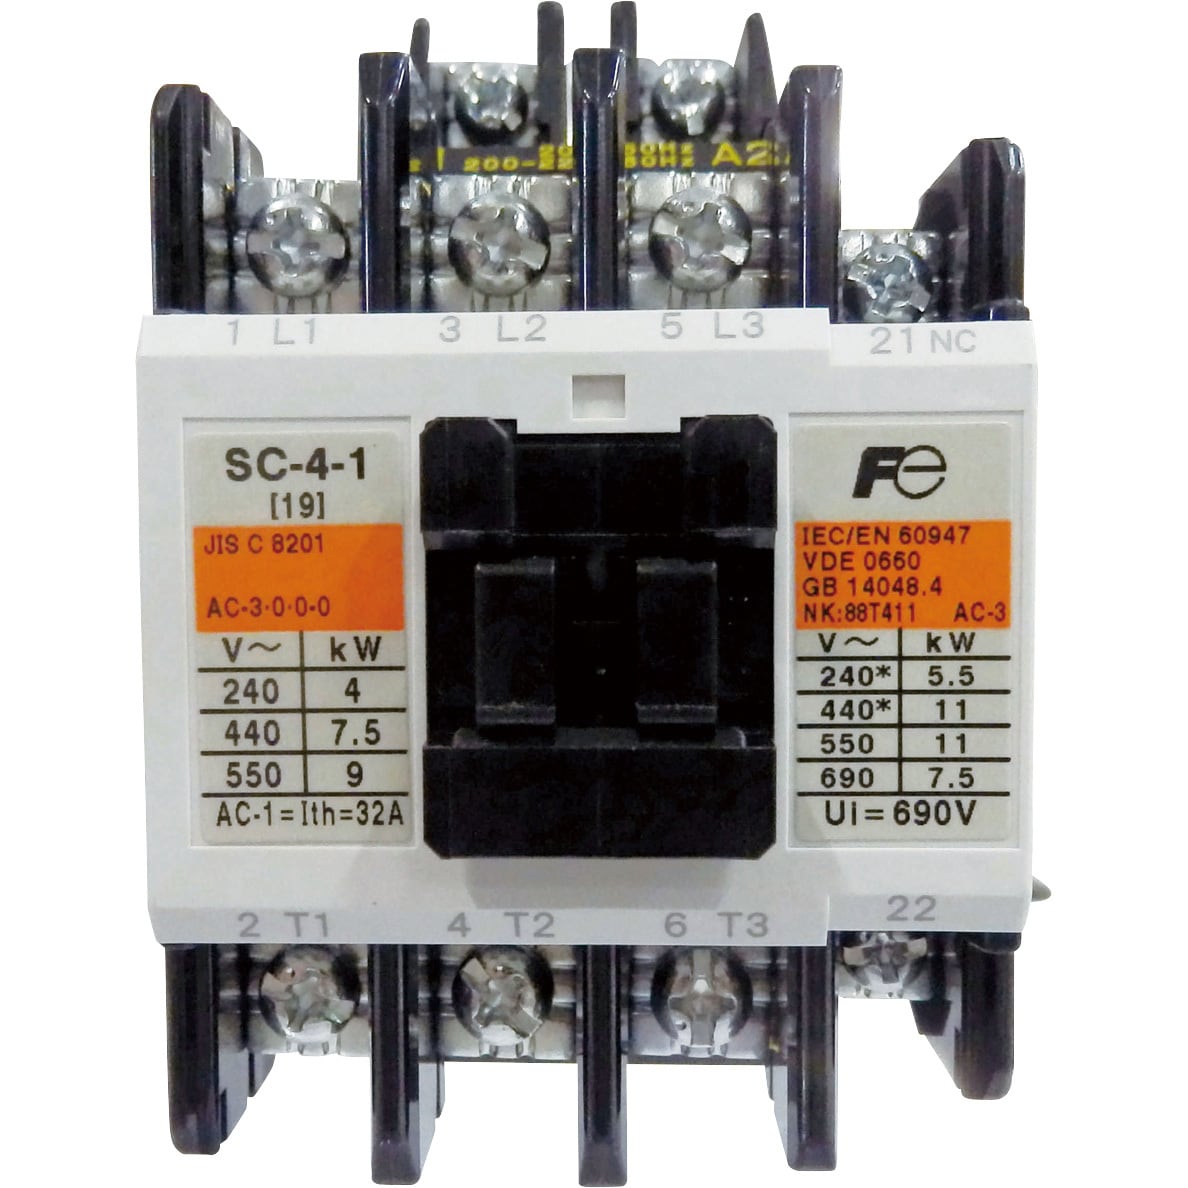 SC-4-1 コイルAC200V 1b 標準形電磁接触器(ケースカバーなし) 1個 富士